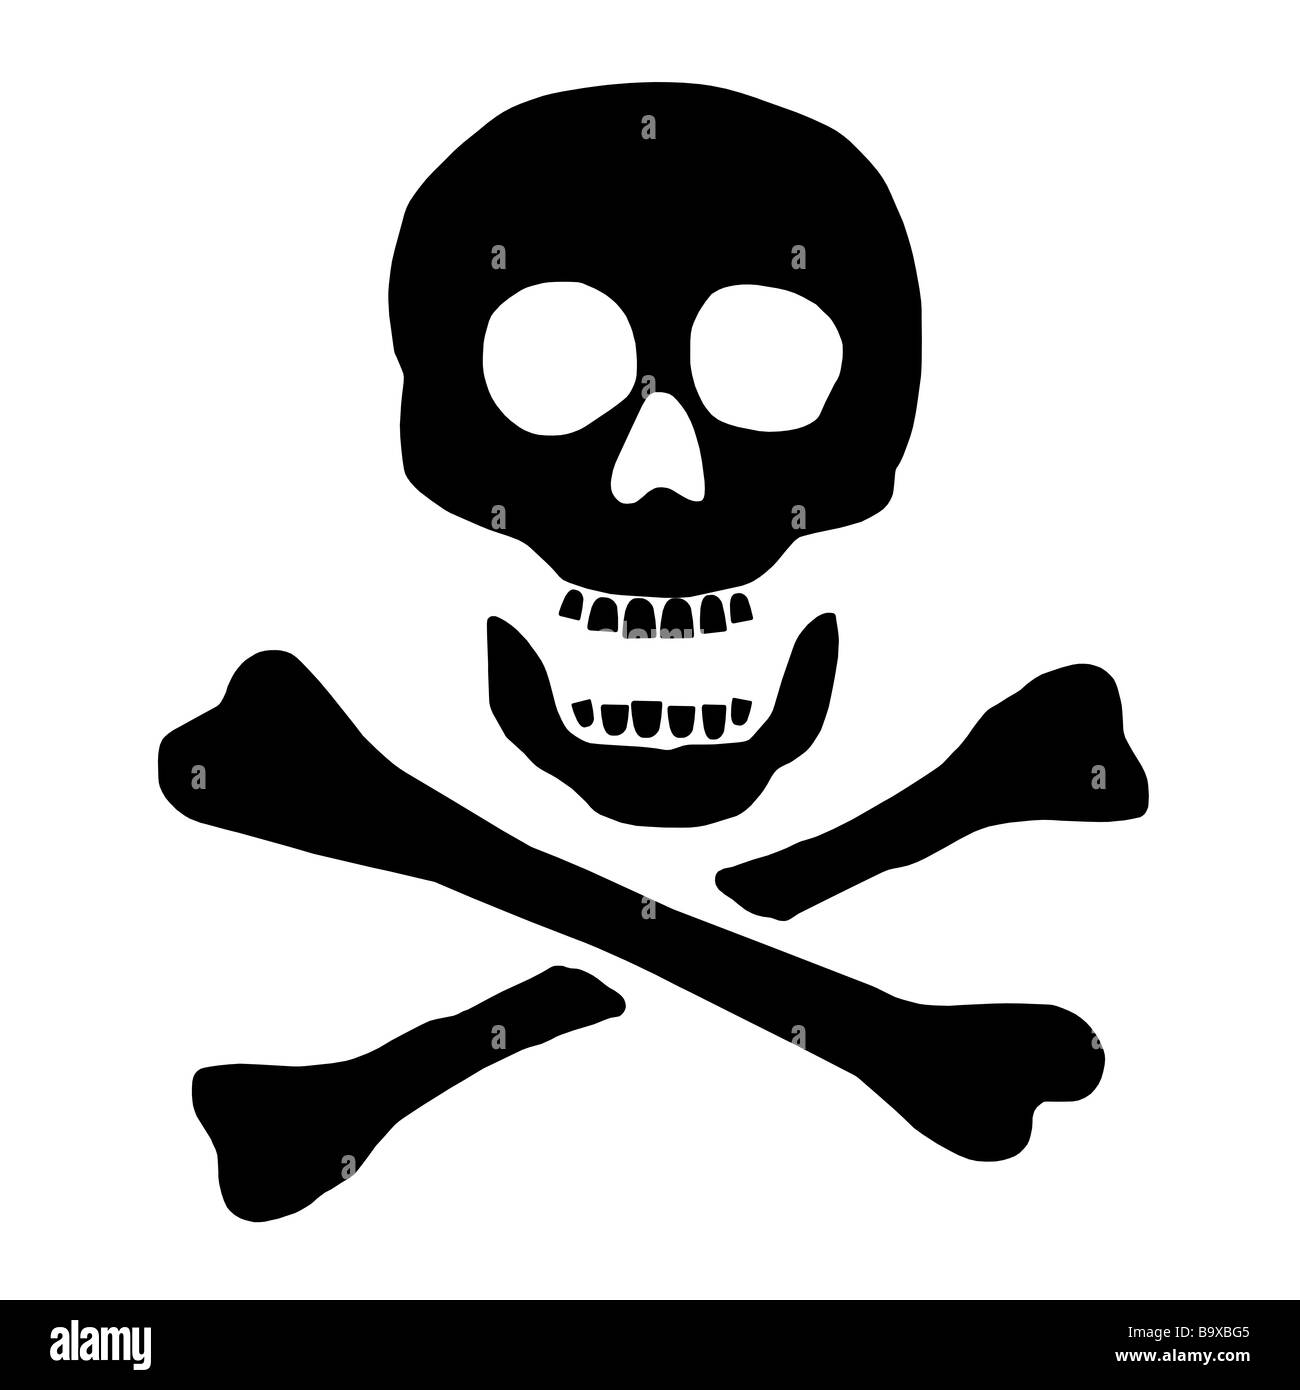 reversed pirate flag Stock Photo